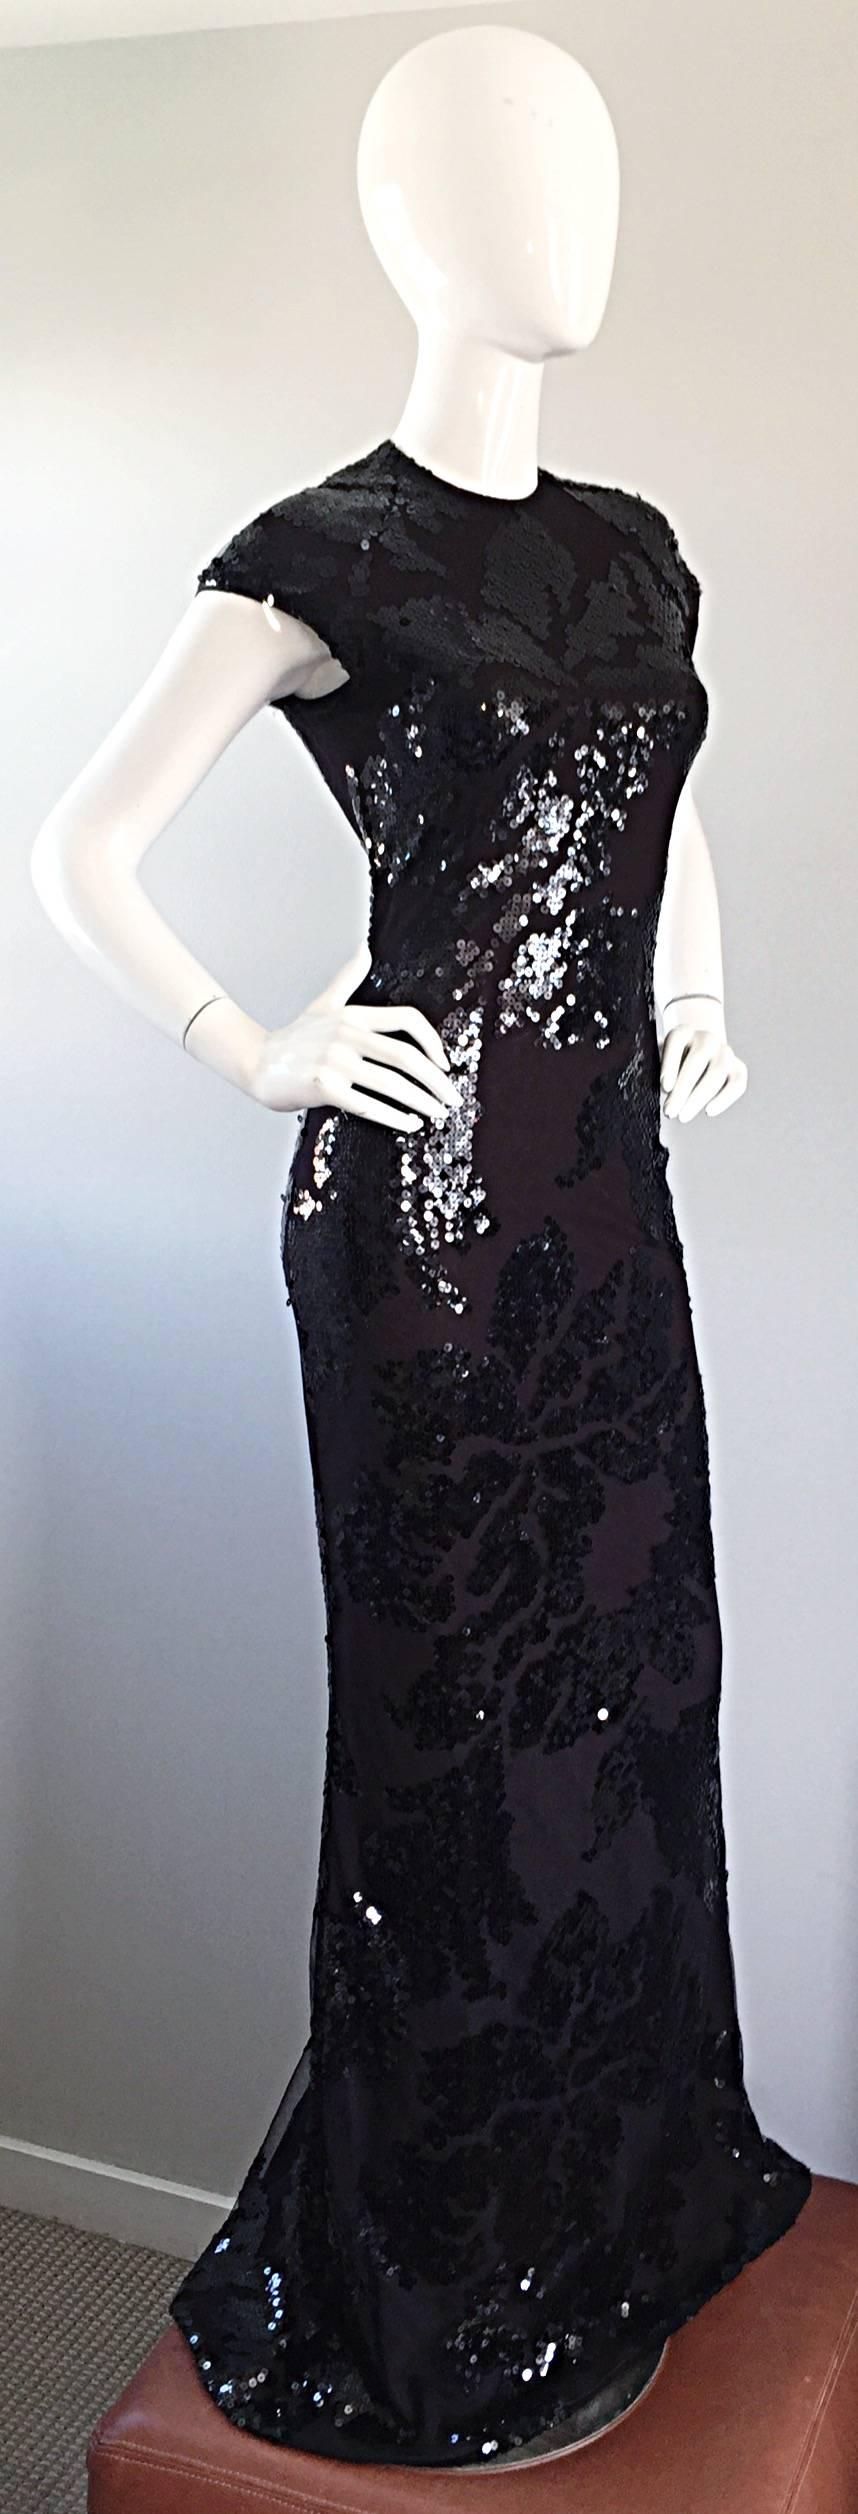 Halston NWT $12k Vintage Size 6 Open Back Black Silk Sequin Gown Dress For Sale 1